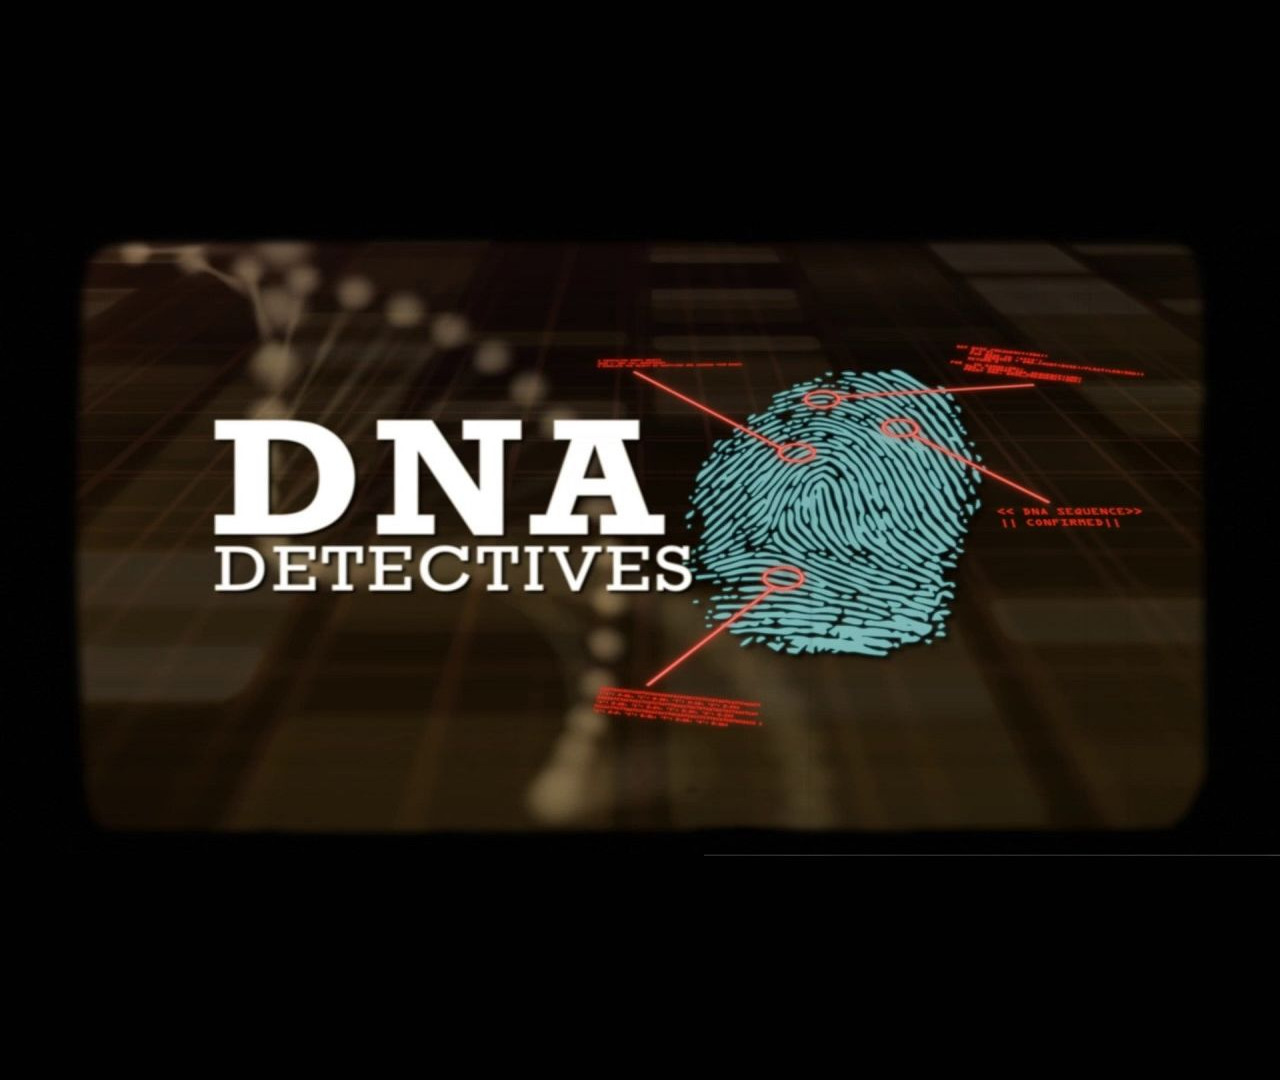 Show DNA Detectives